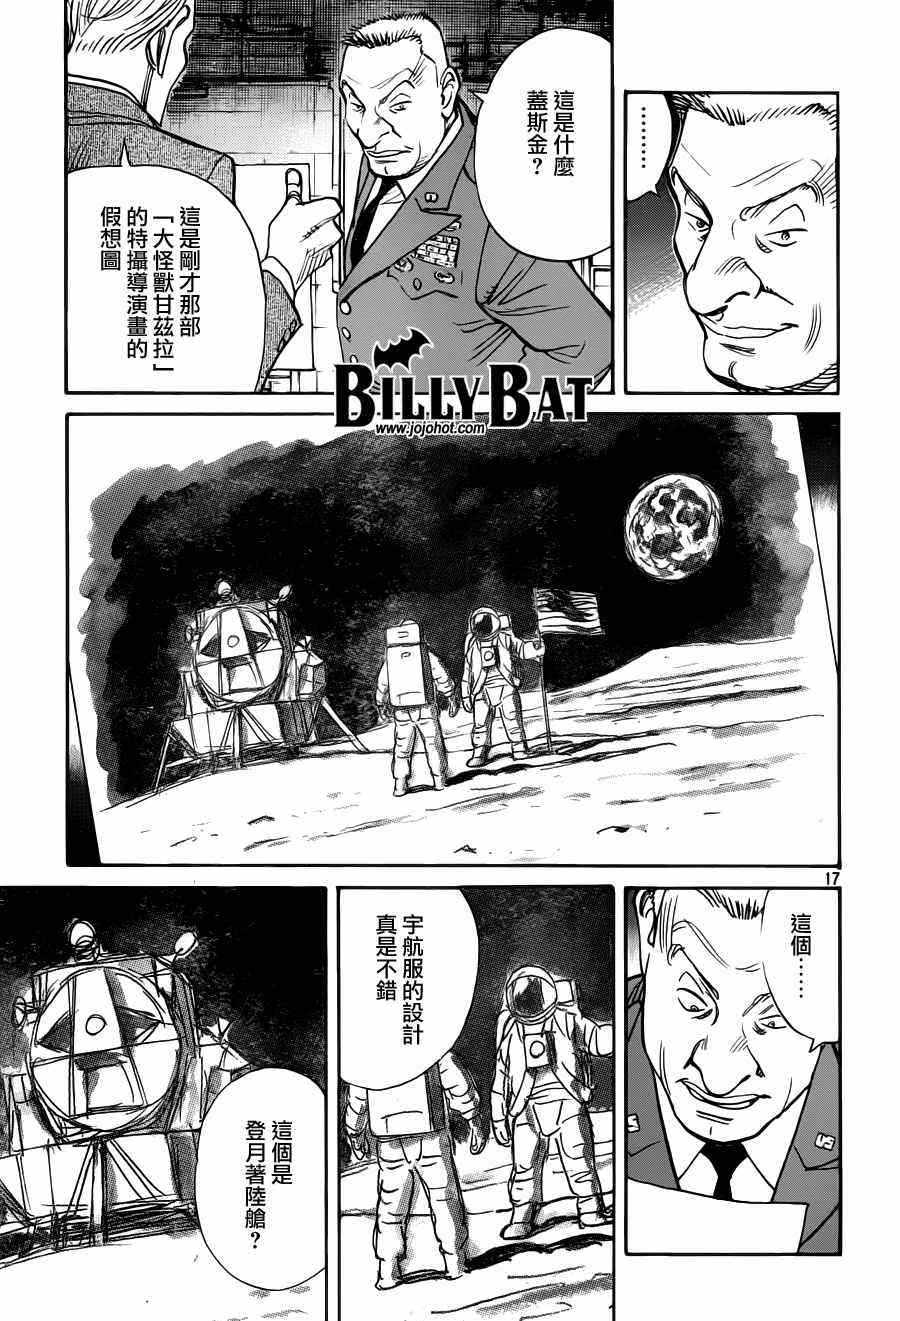 Billy_Bat - 第74話 - 2